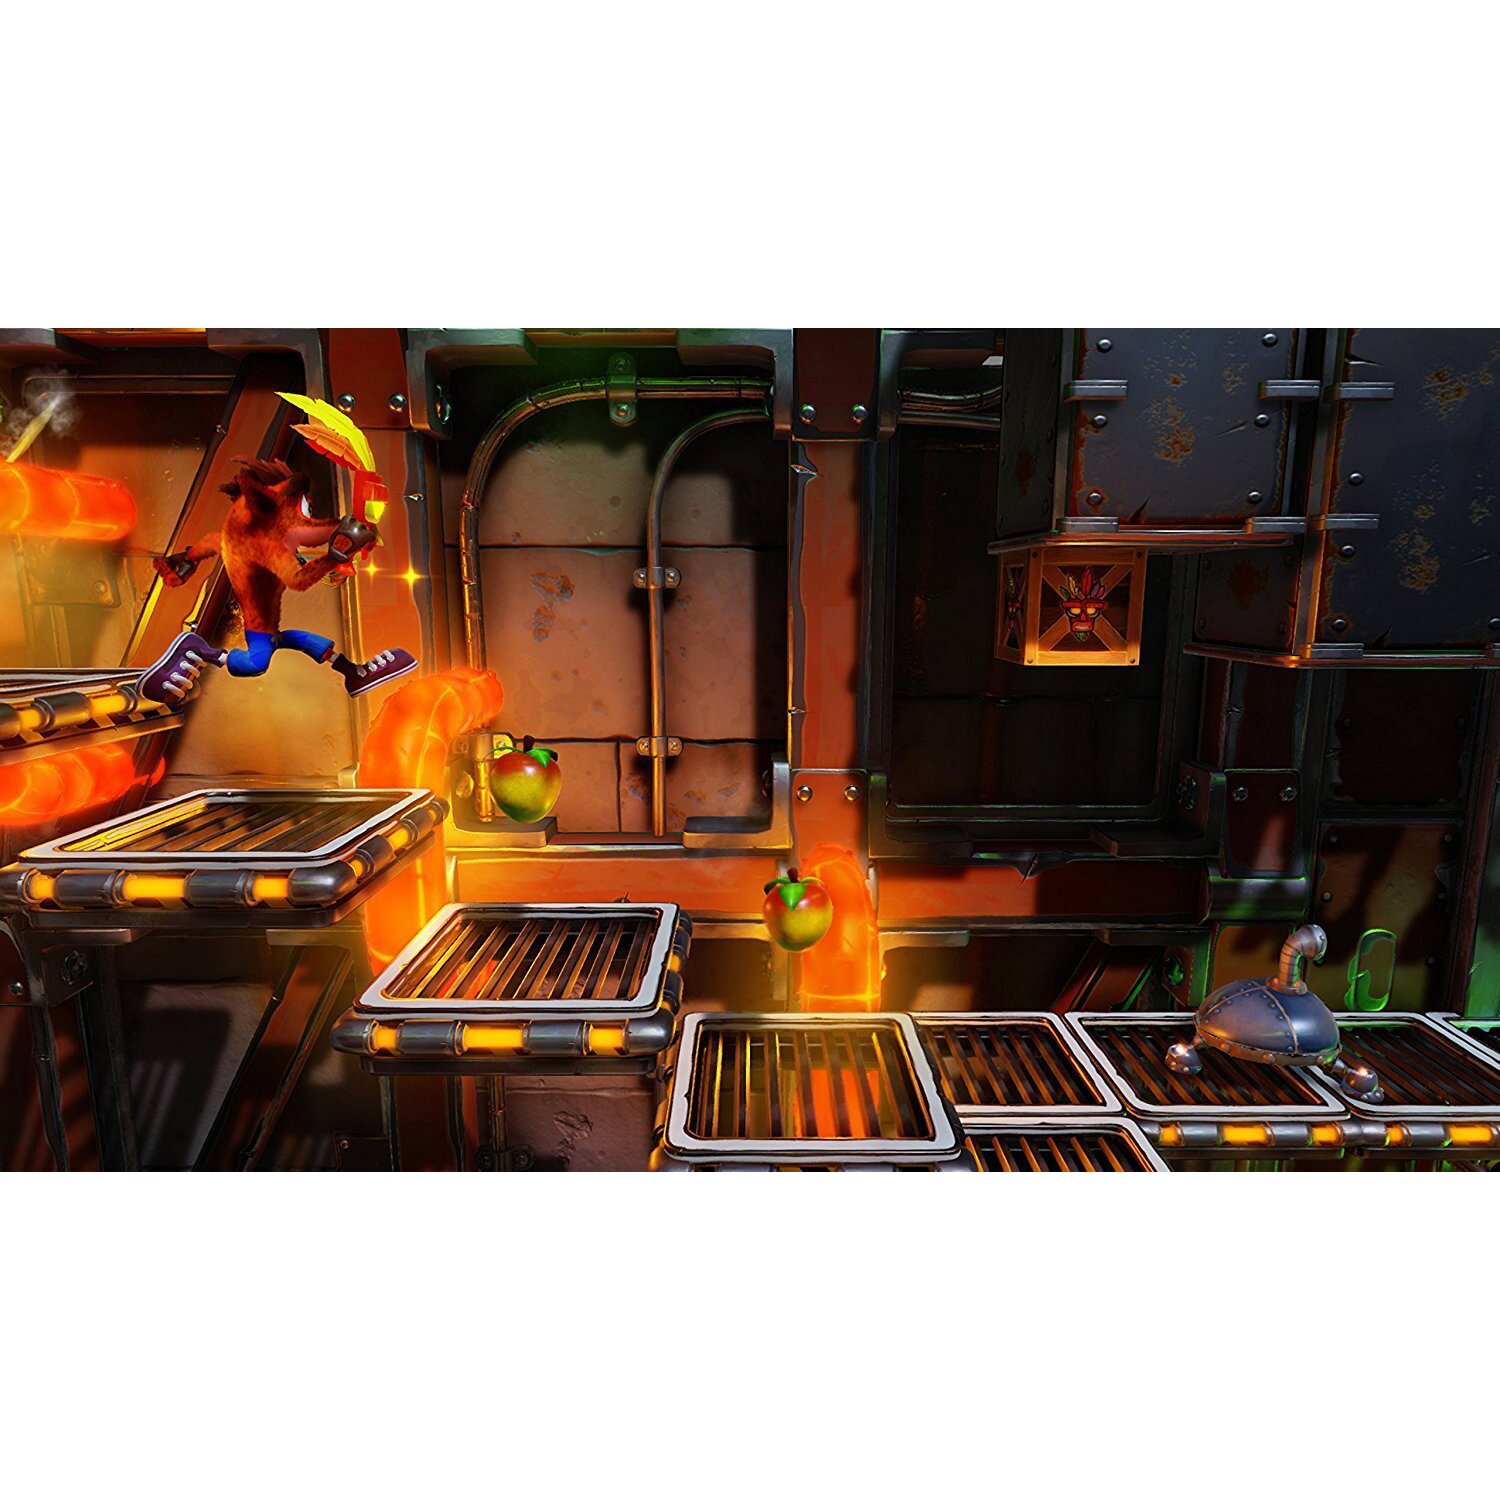 Crash Bandicoot N.Sane Trilogy Sony Playstation 4 PS4 Game FREE P&P